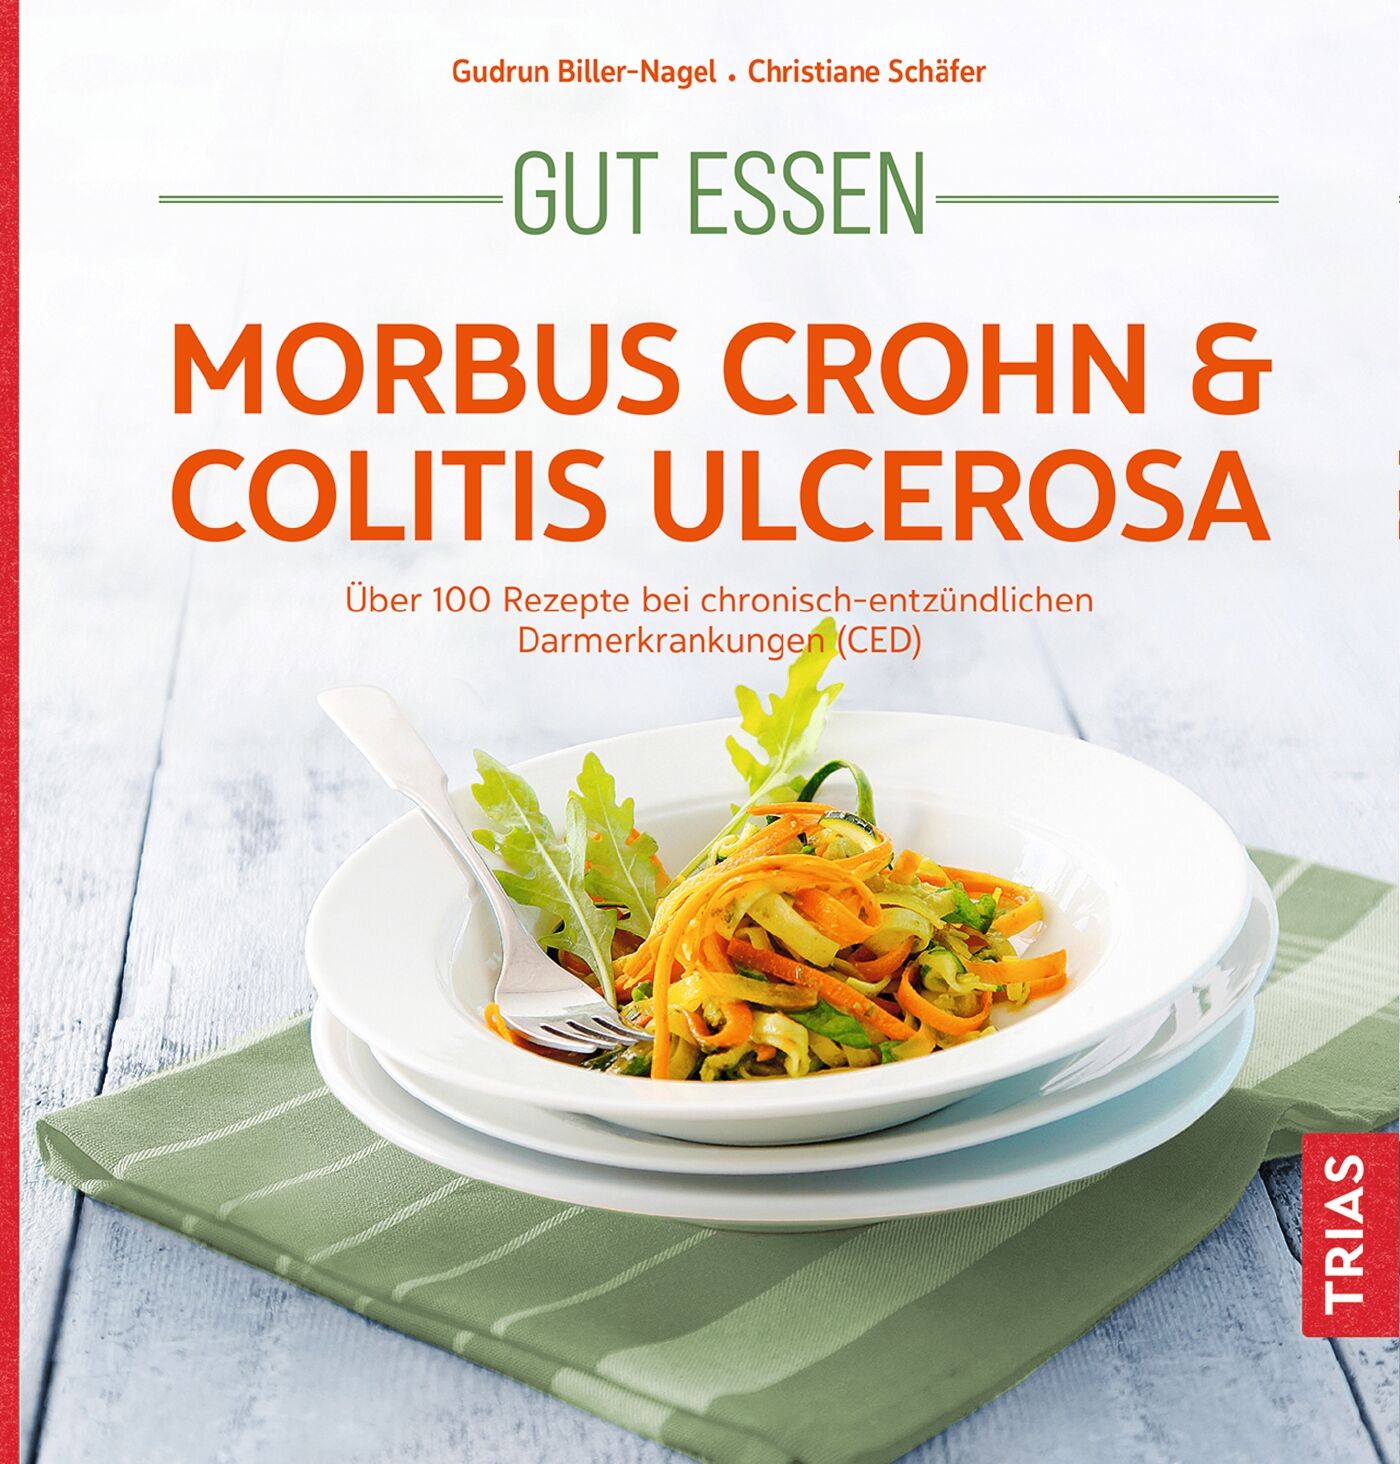 Gut essen - Morbus Crohn & Colitis ulcerosa, 9783432113975